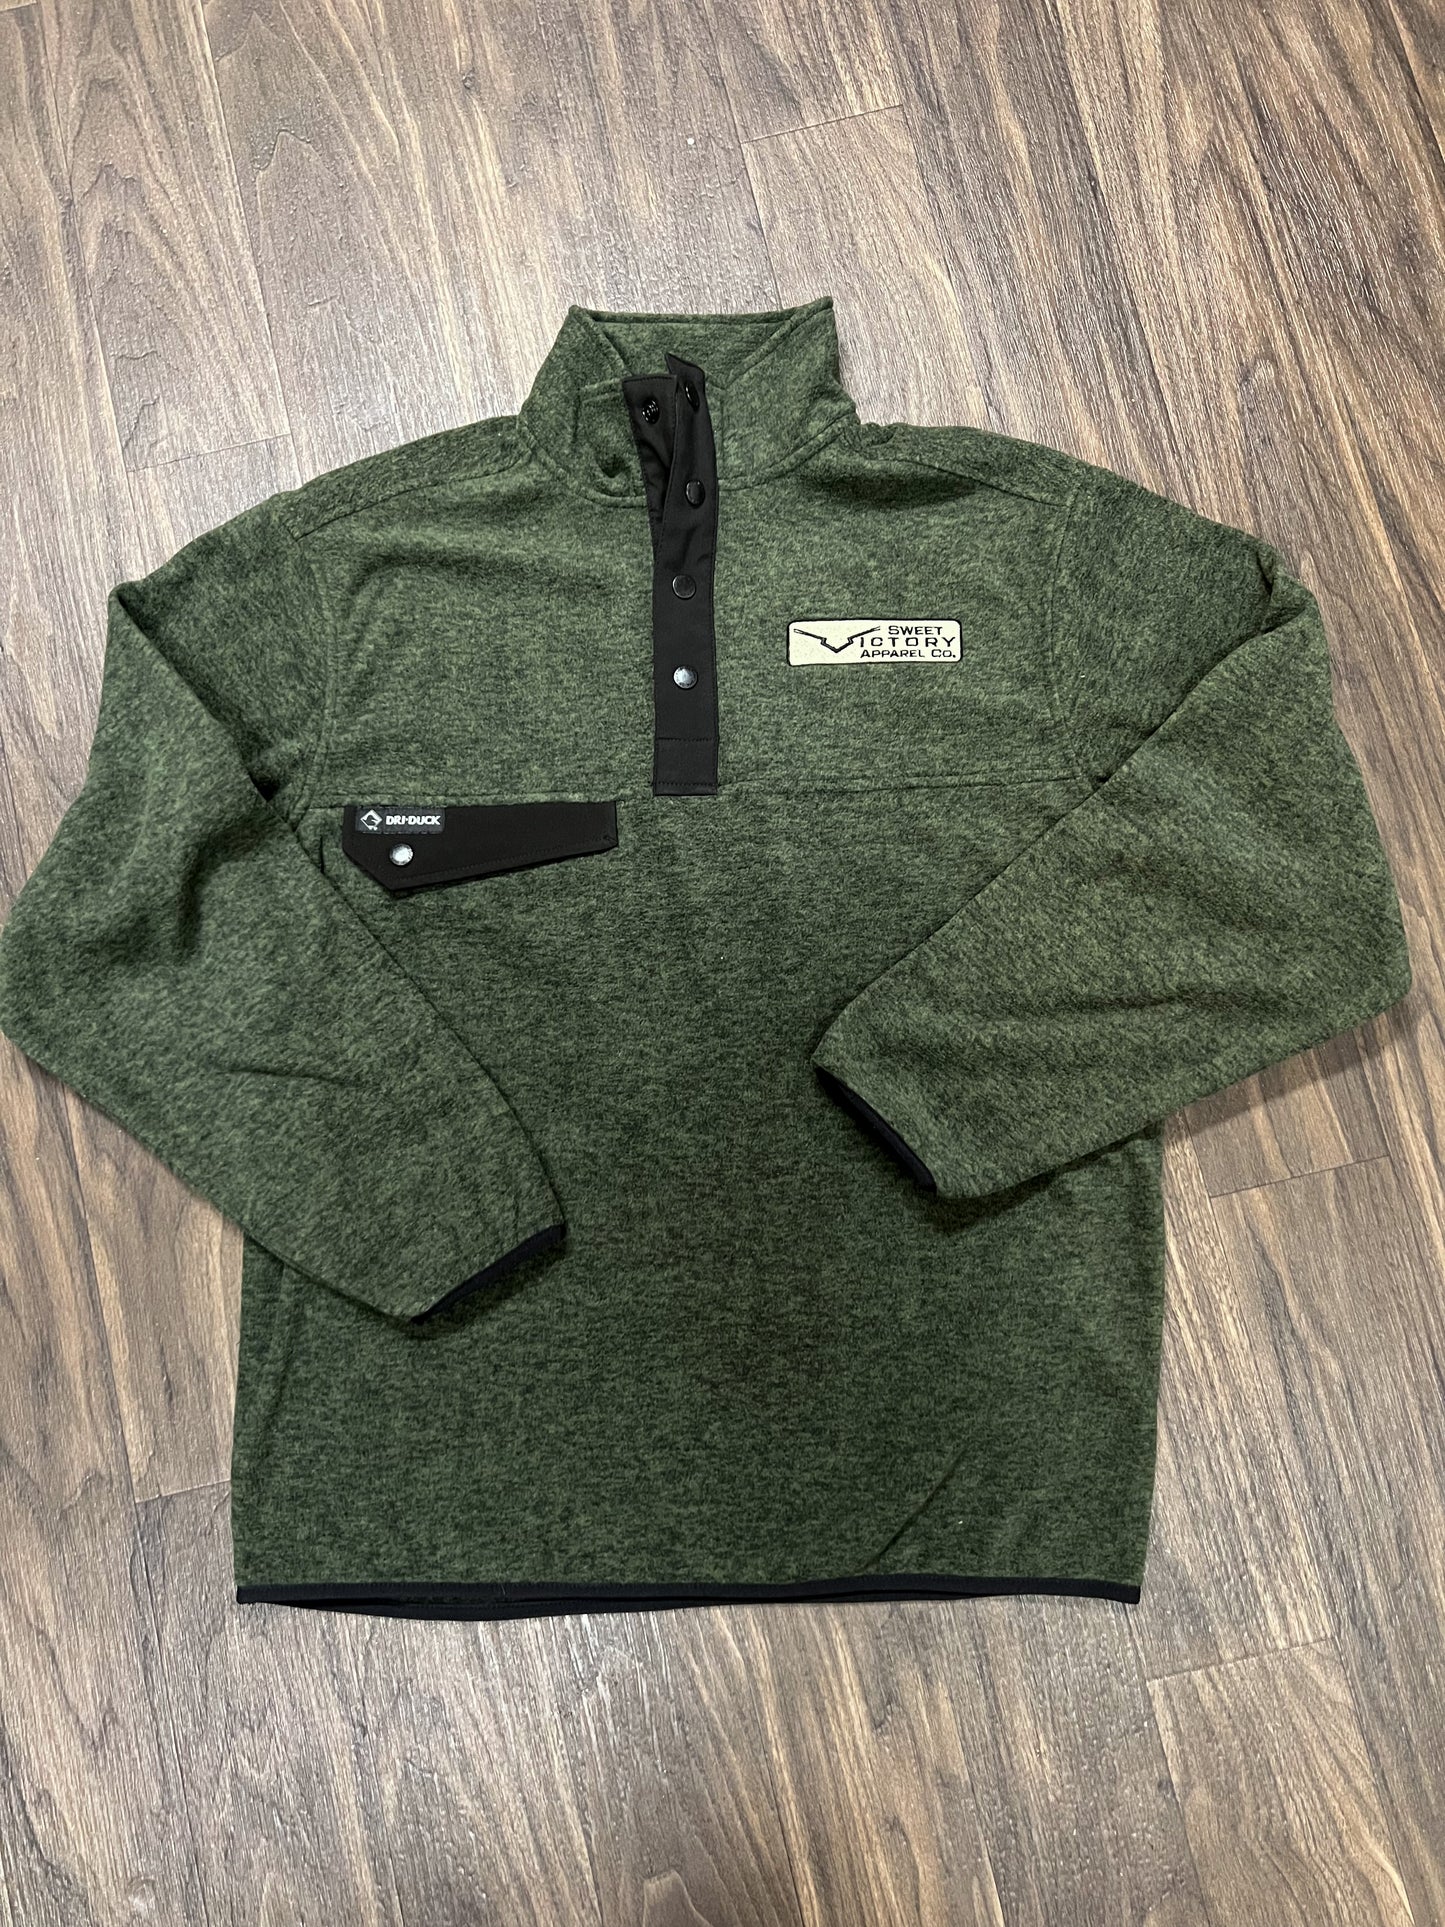 Mens Green/Black 1/4 Button Down Embroidery Sweatshirt